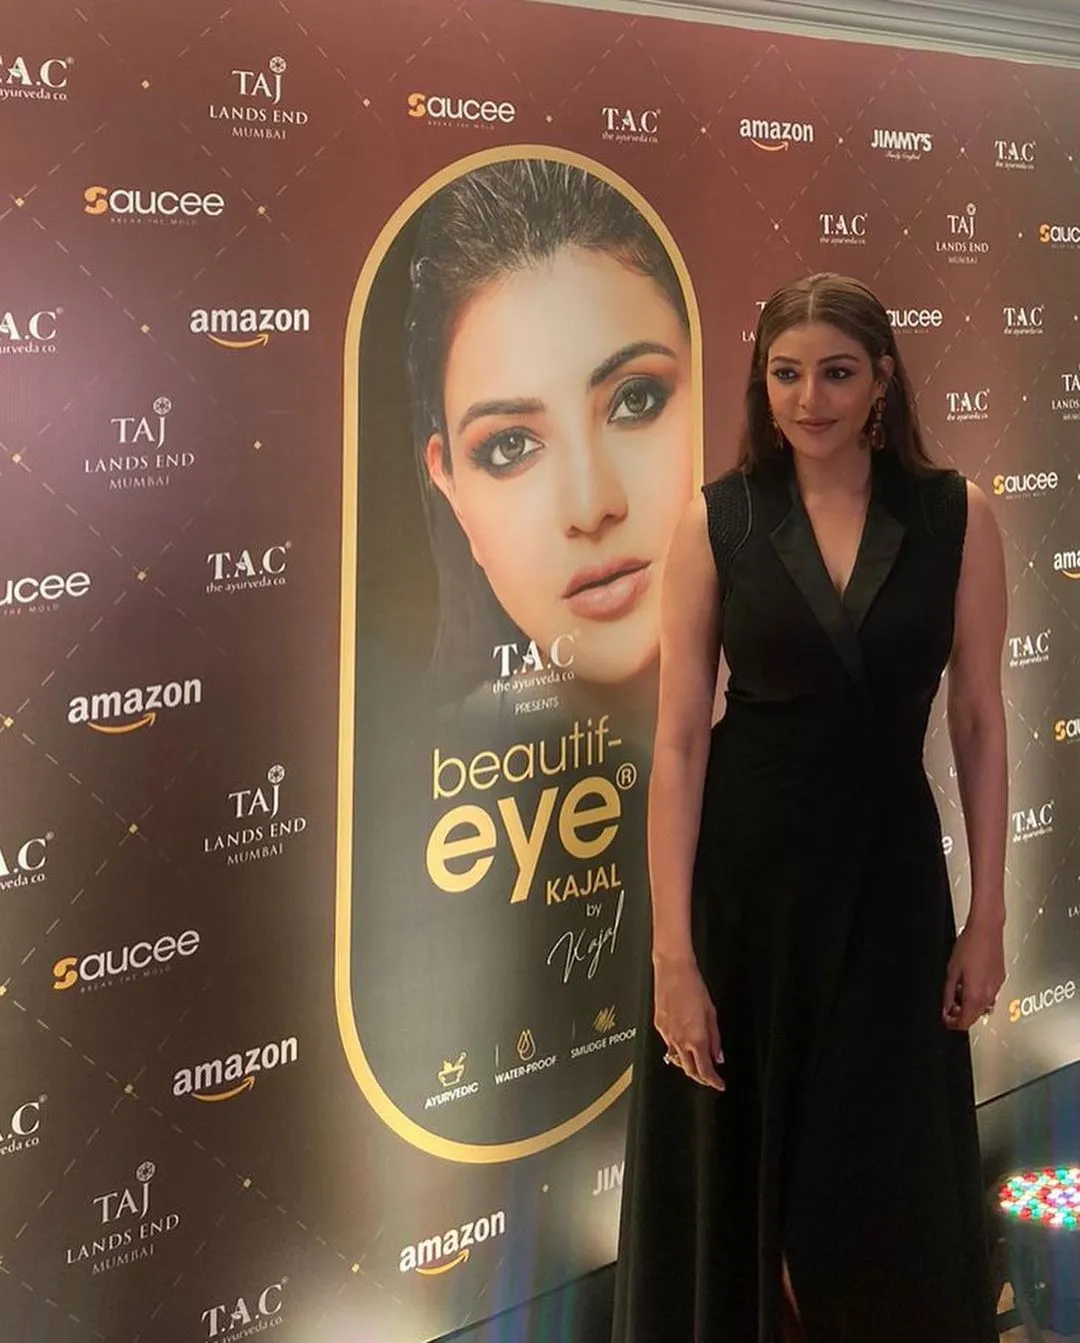 Kajal launches eye liner product